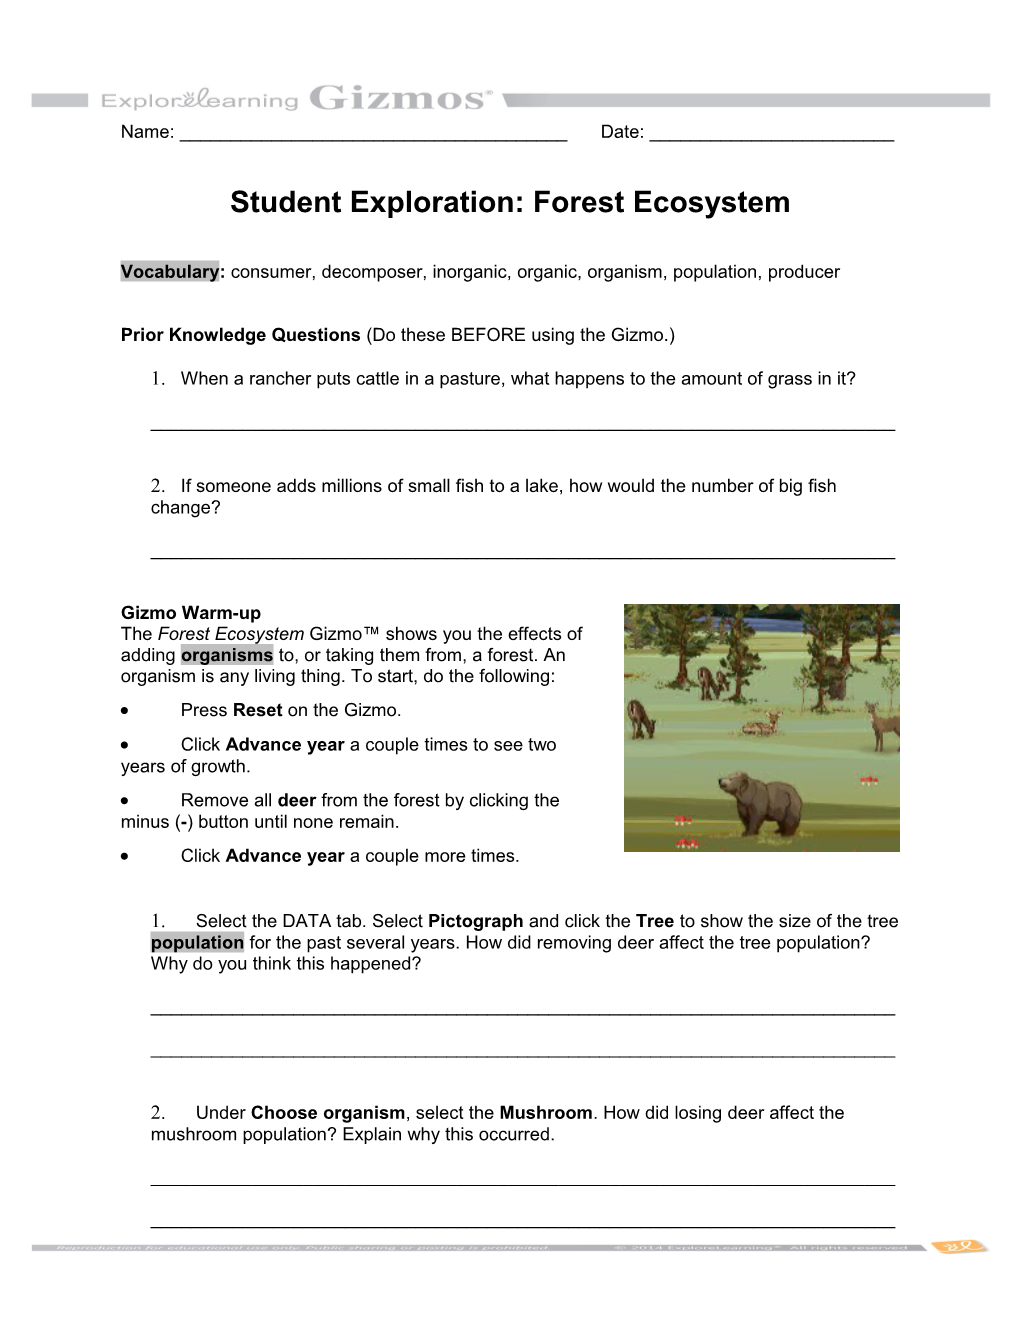 Student Exploration: Forest Ecosystem